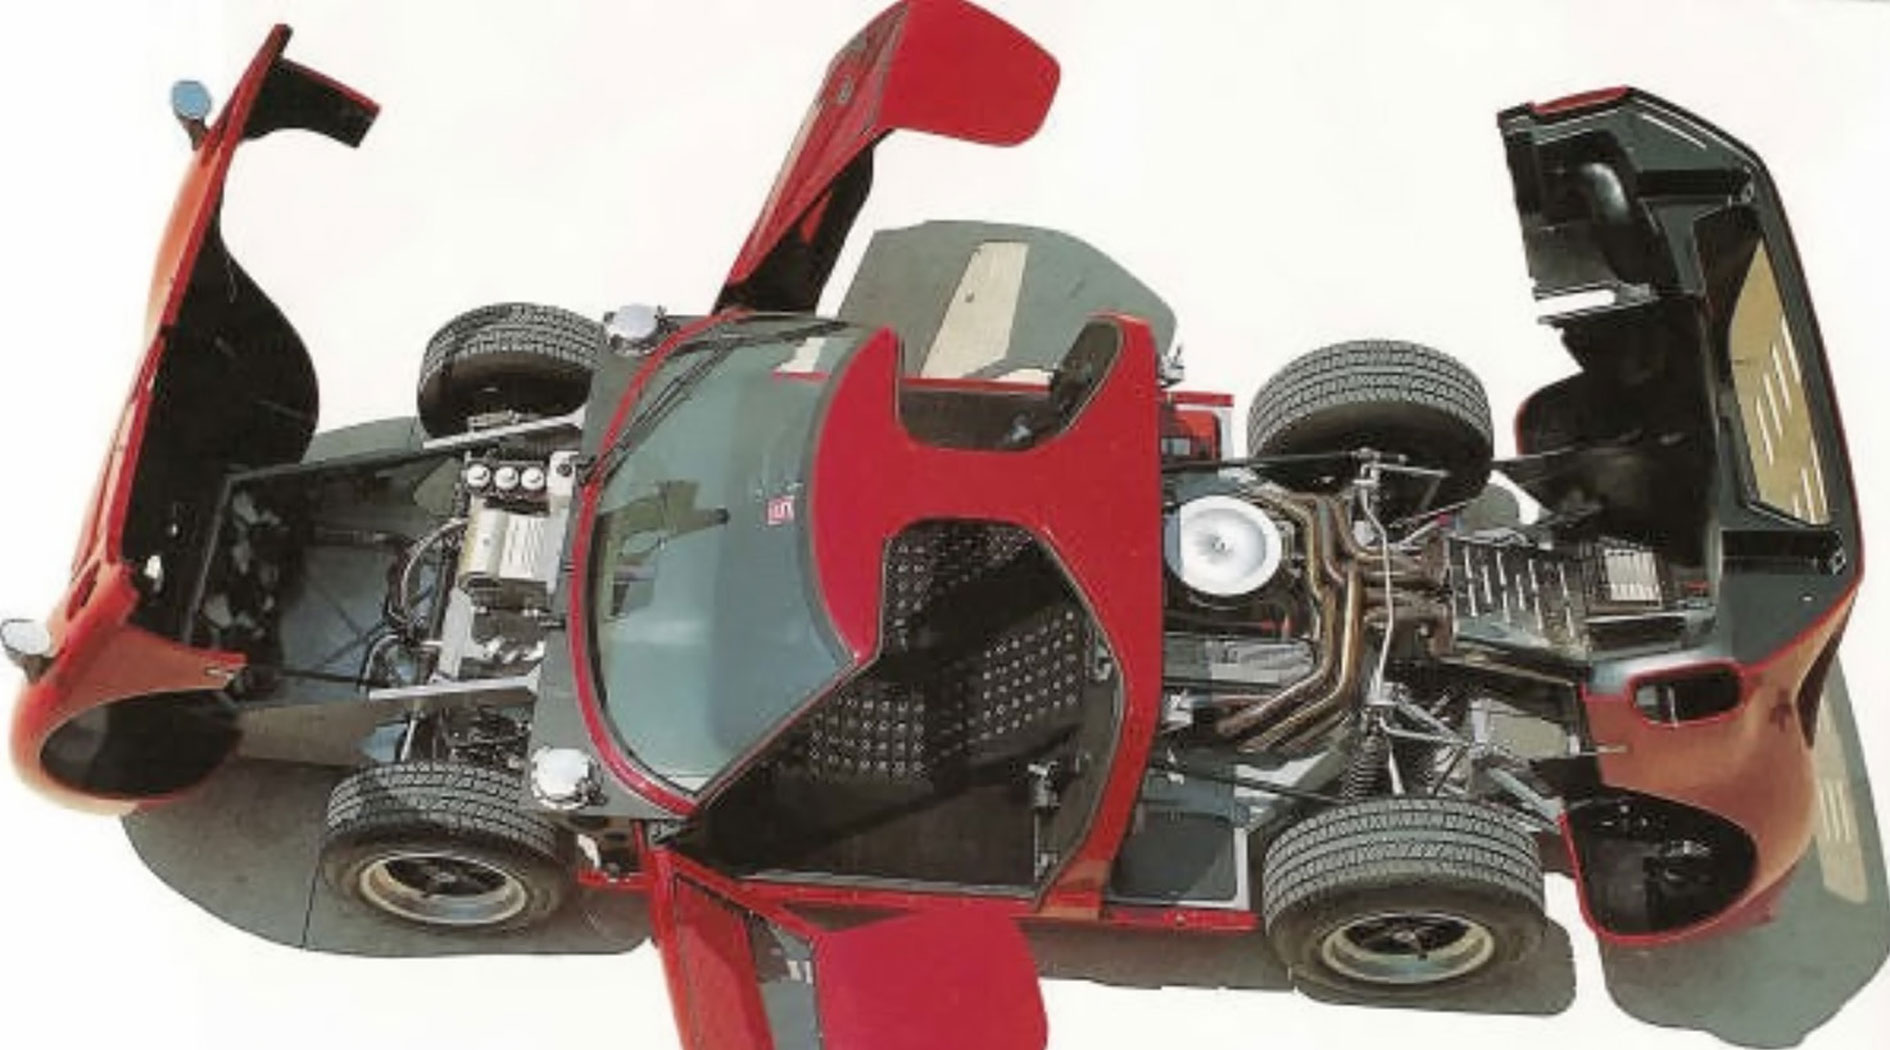 GT40 Mark V chassis 1121